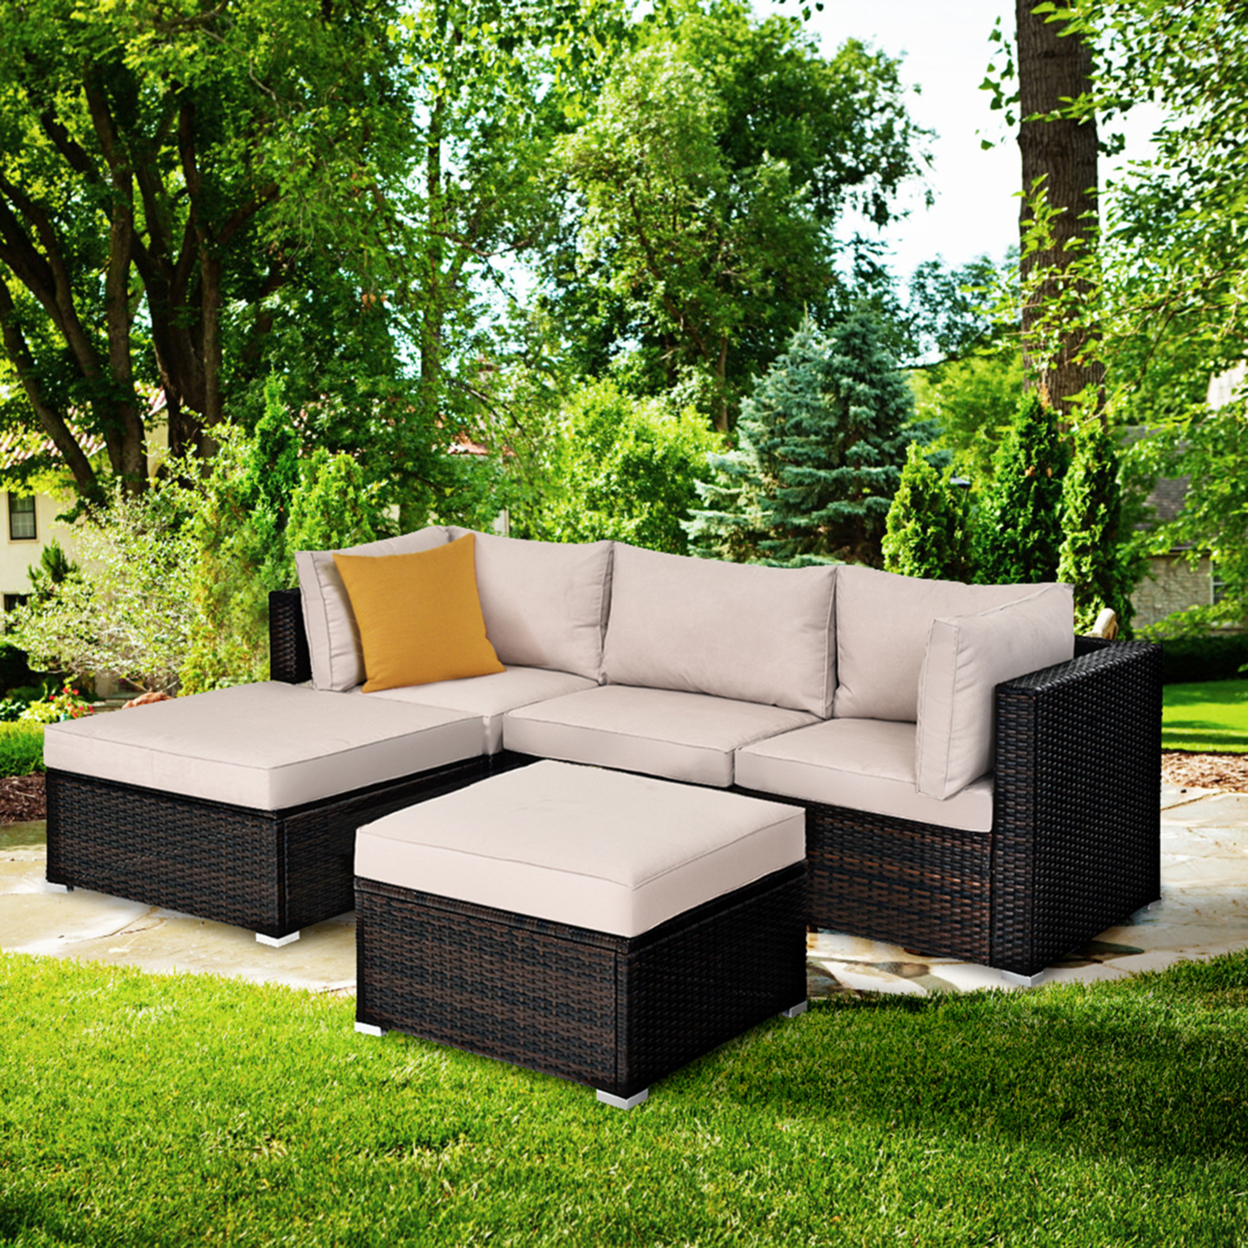 5PCS Rattan Patio Conversation Set Outdoor Furniture Set W/ Ottoman Cushion